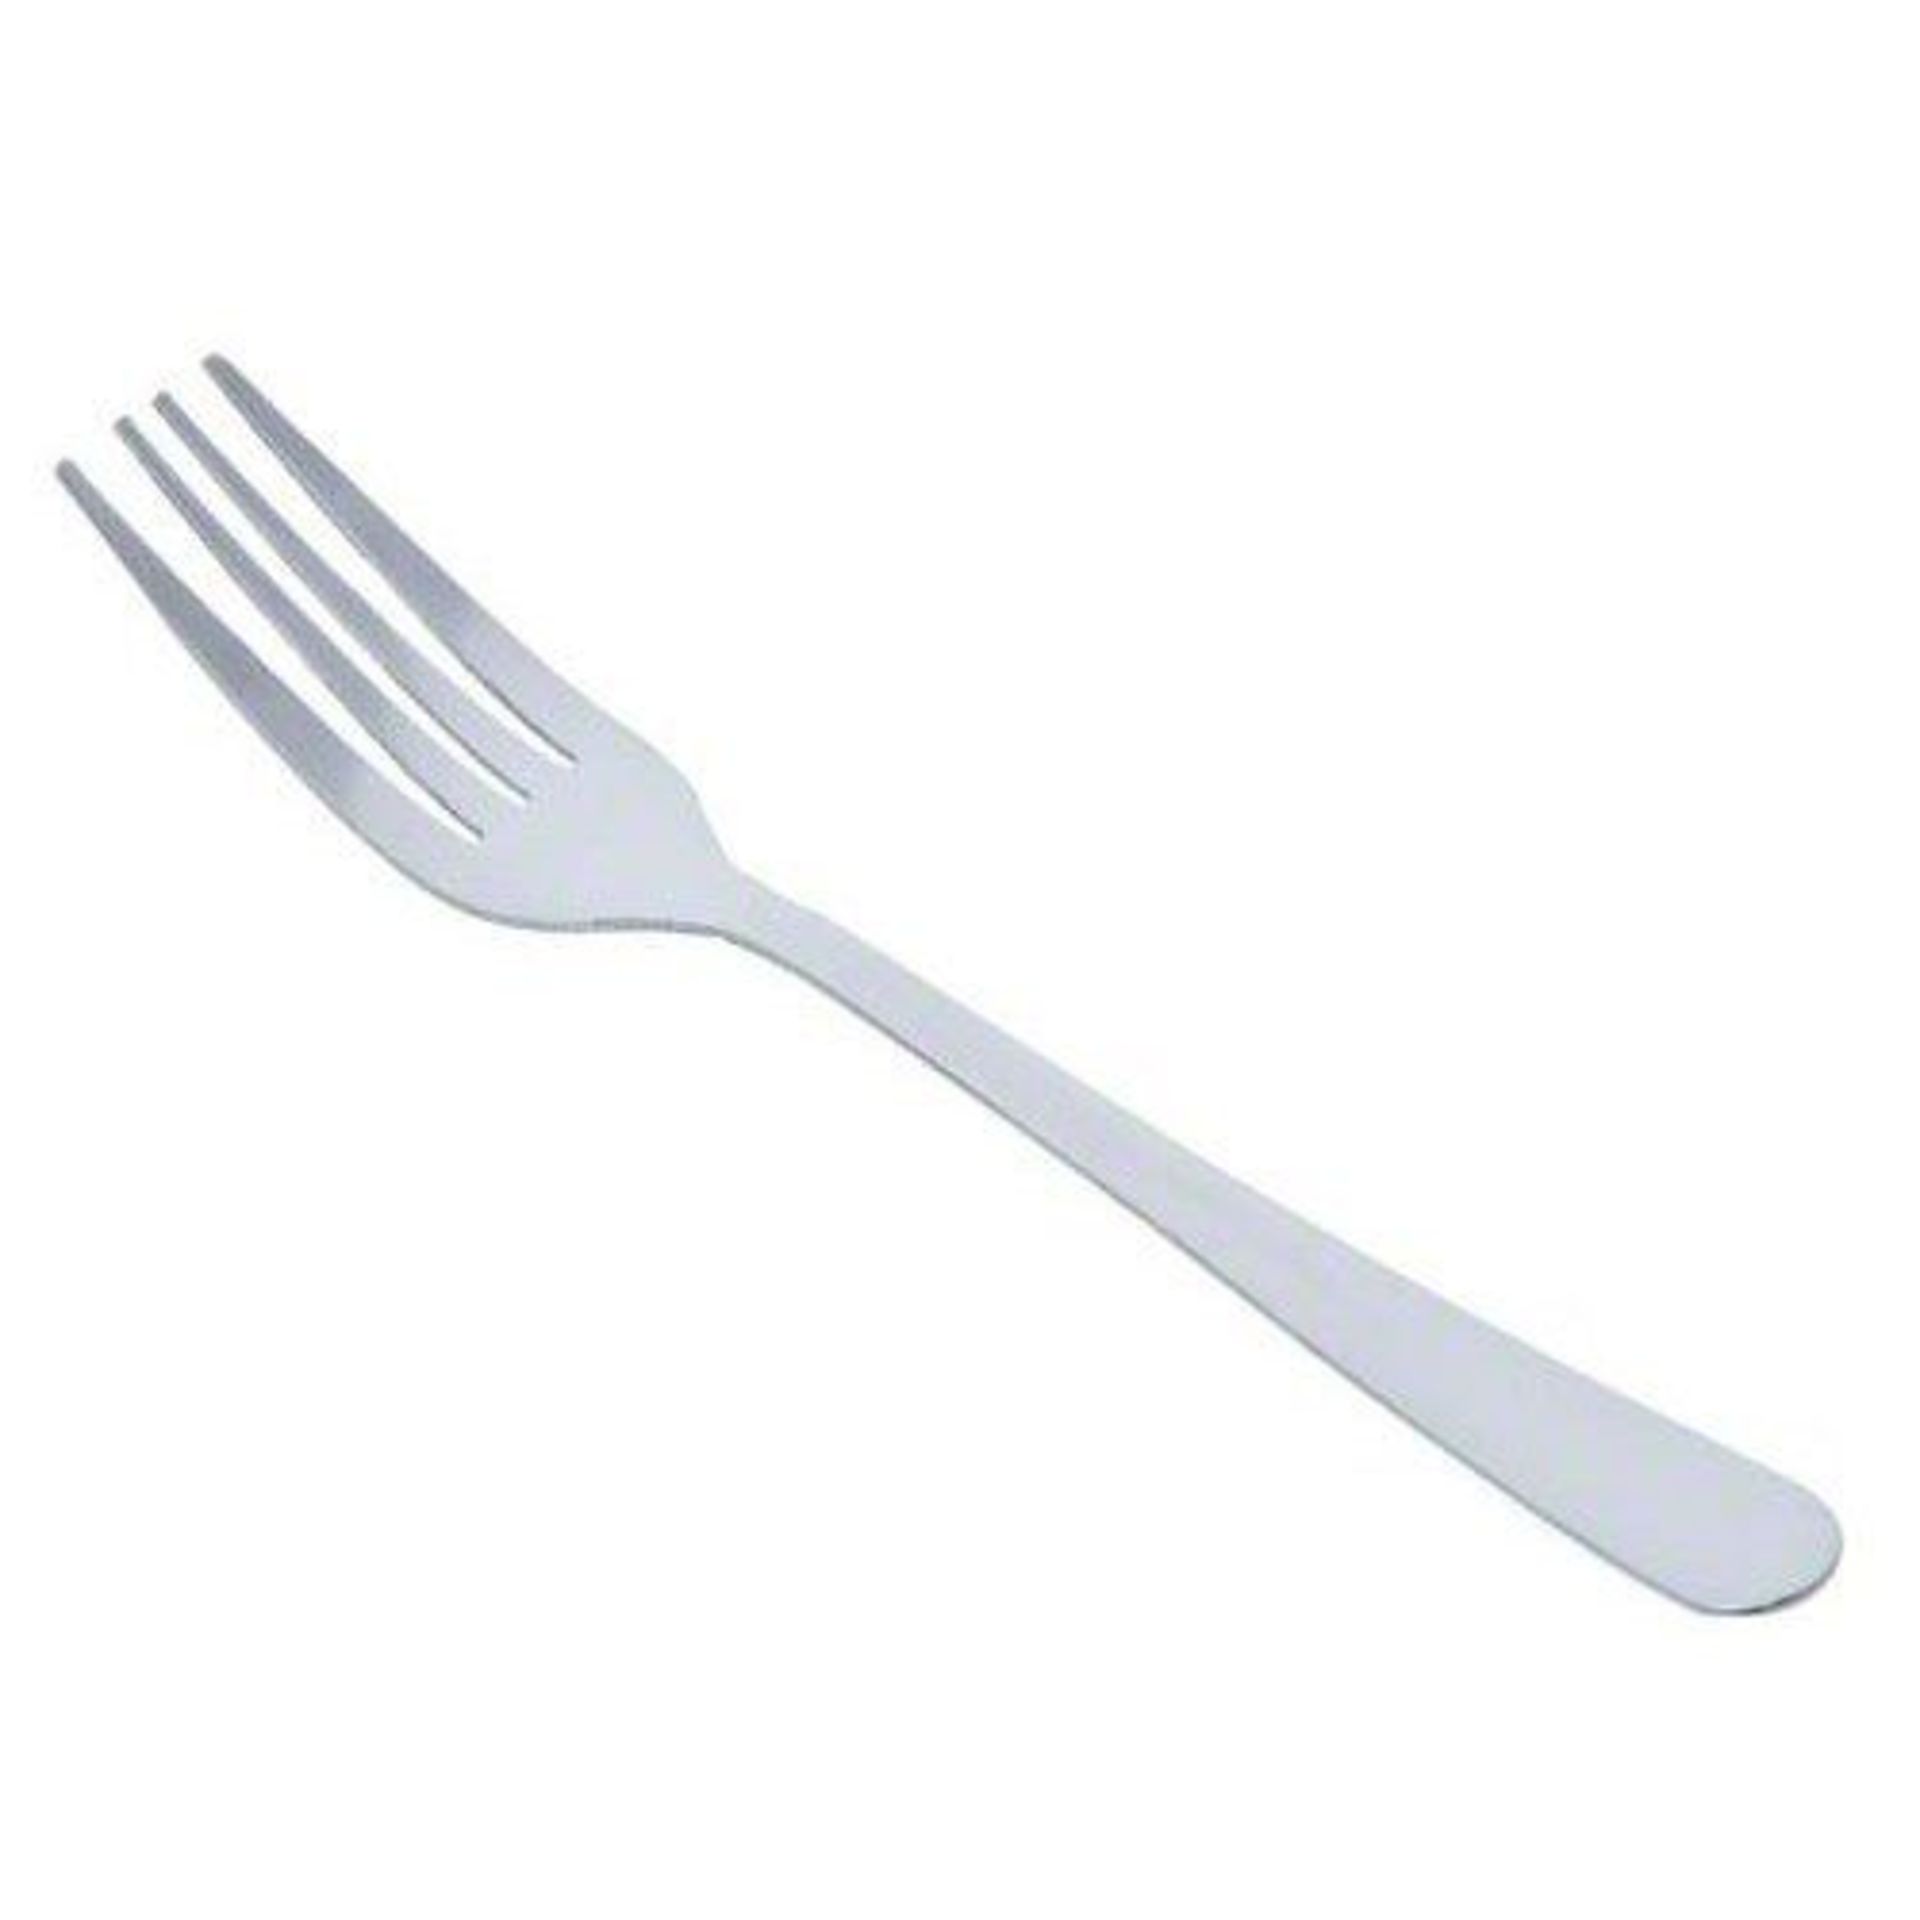 Stainless Dinner Forks, Windsor Series - Lot of 48 - Image 2 of 2